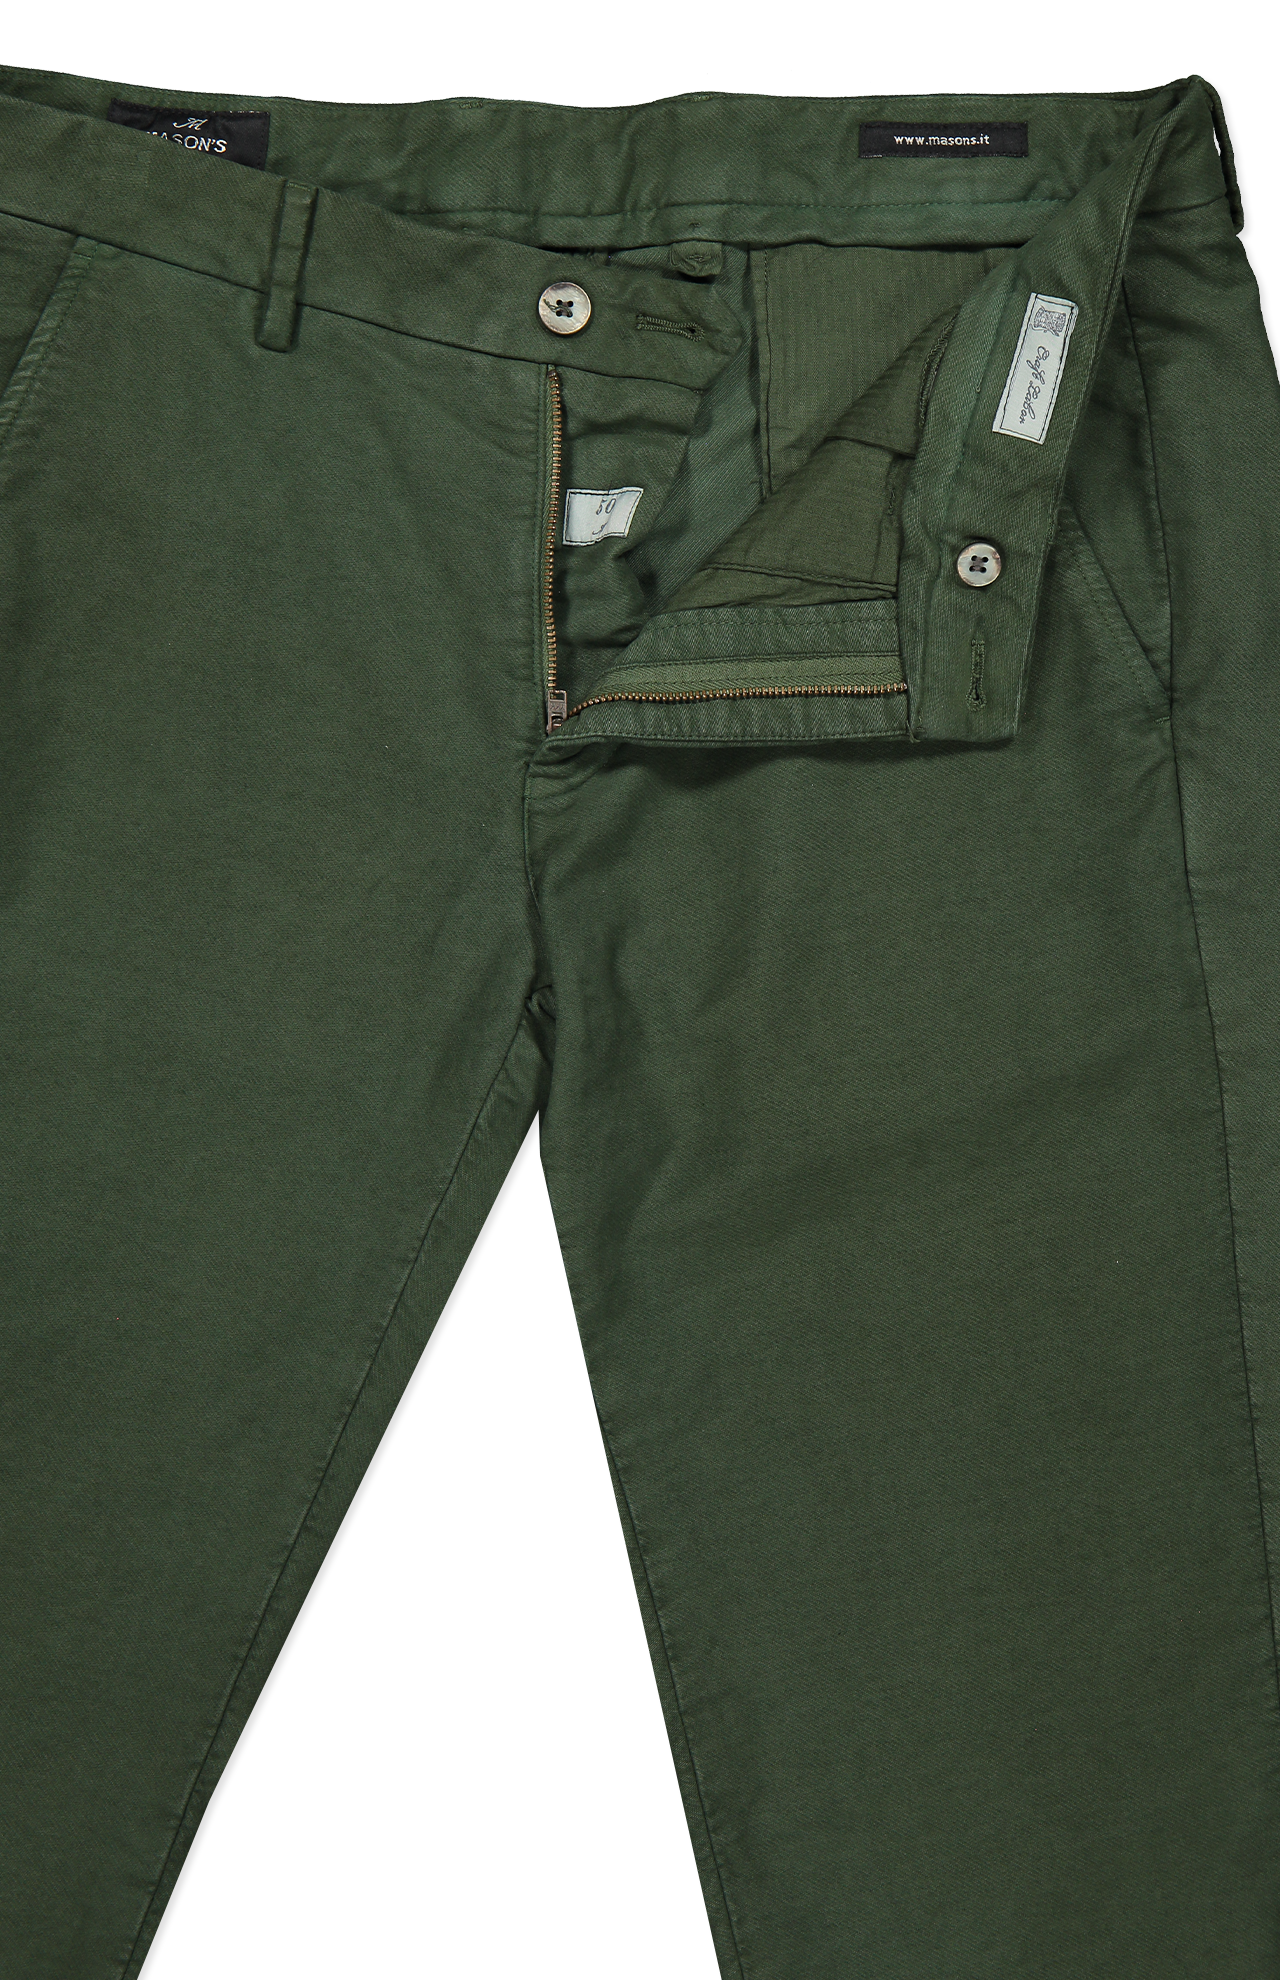 Mason's Torino Style Moleskin Chino Pant in Pine Zip Fly Detail Image  (6955219976307)